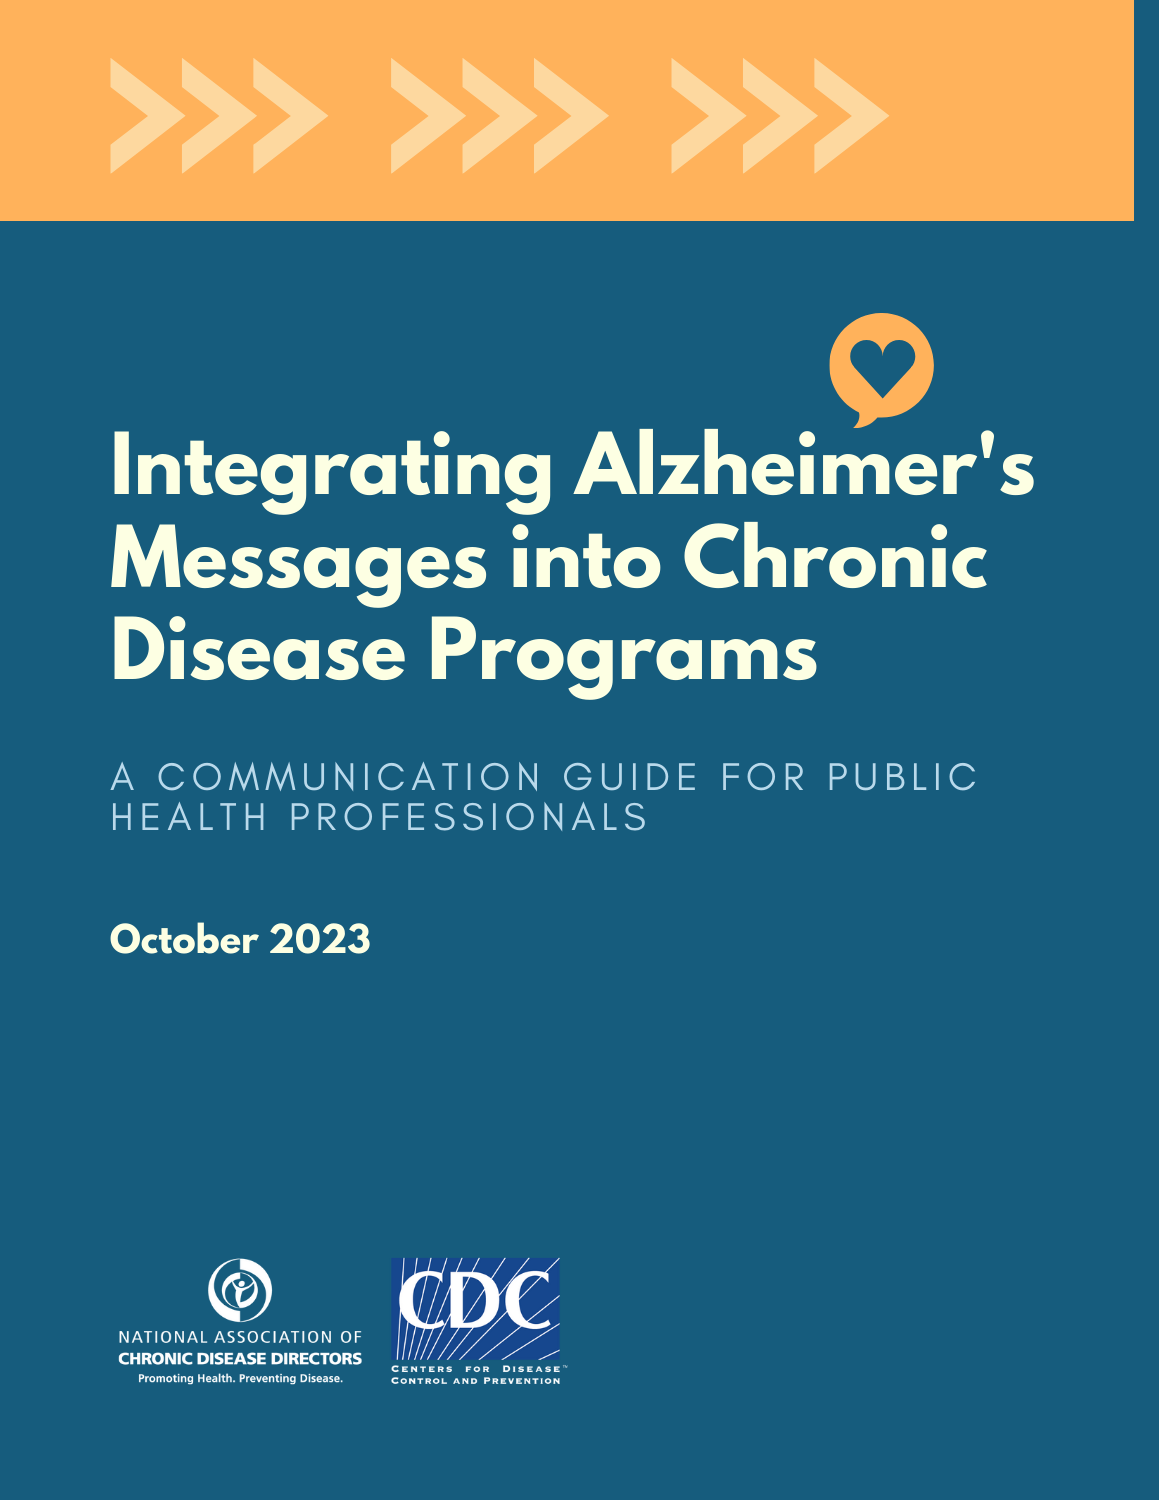 Integrating Alzheimer's Messages into Chronic Disease Programs.